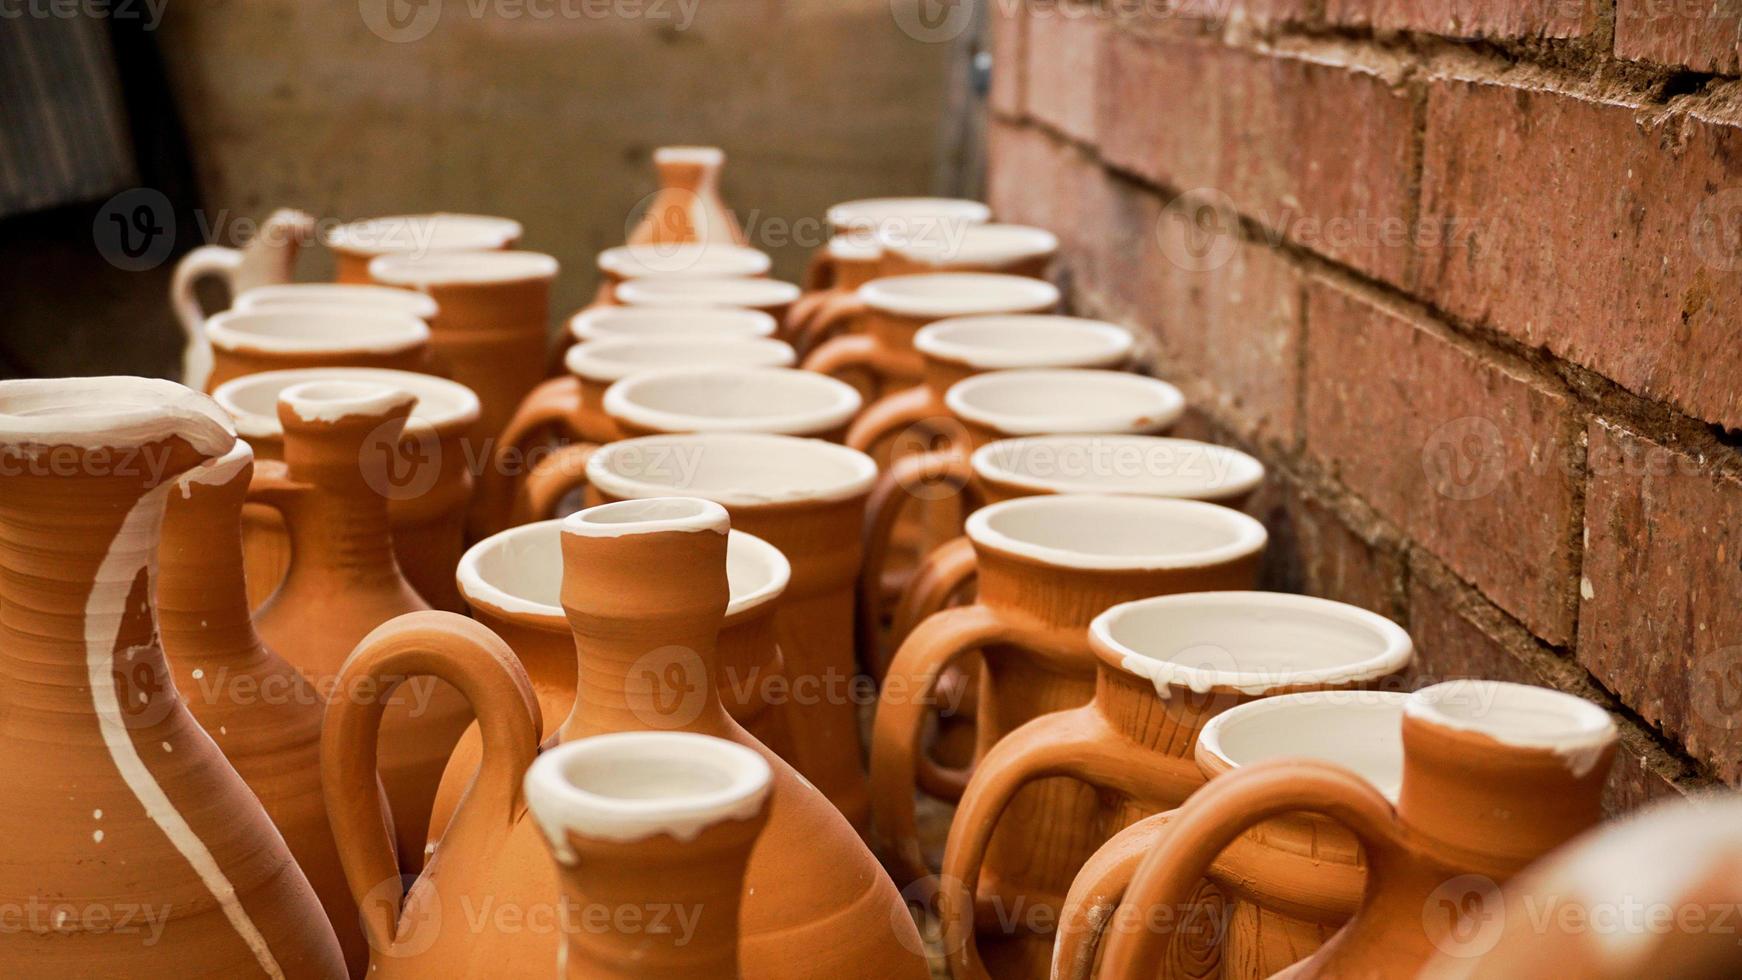 Close-up photo of clay jugs. Rows of handmade earthenware jugs